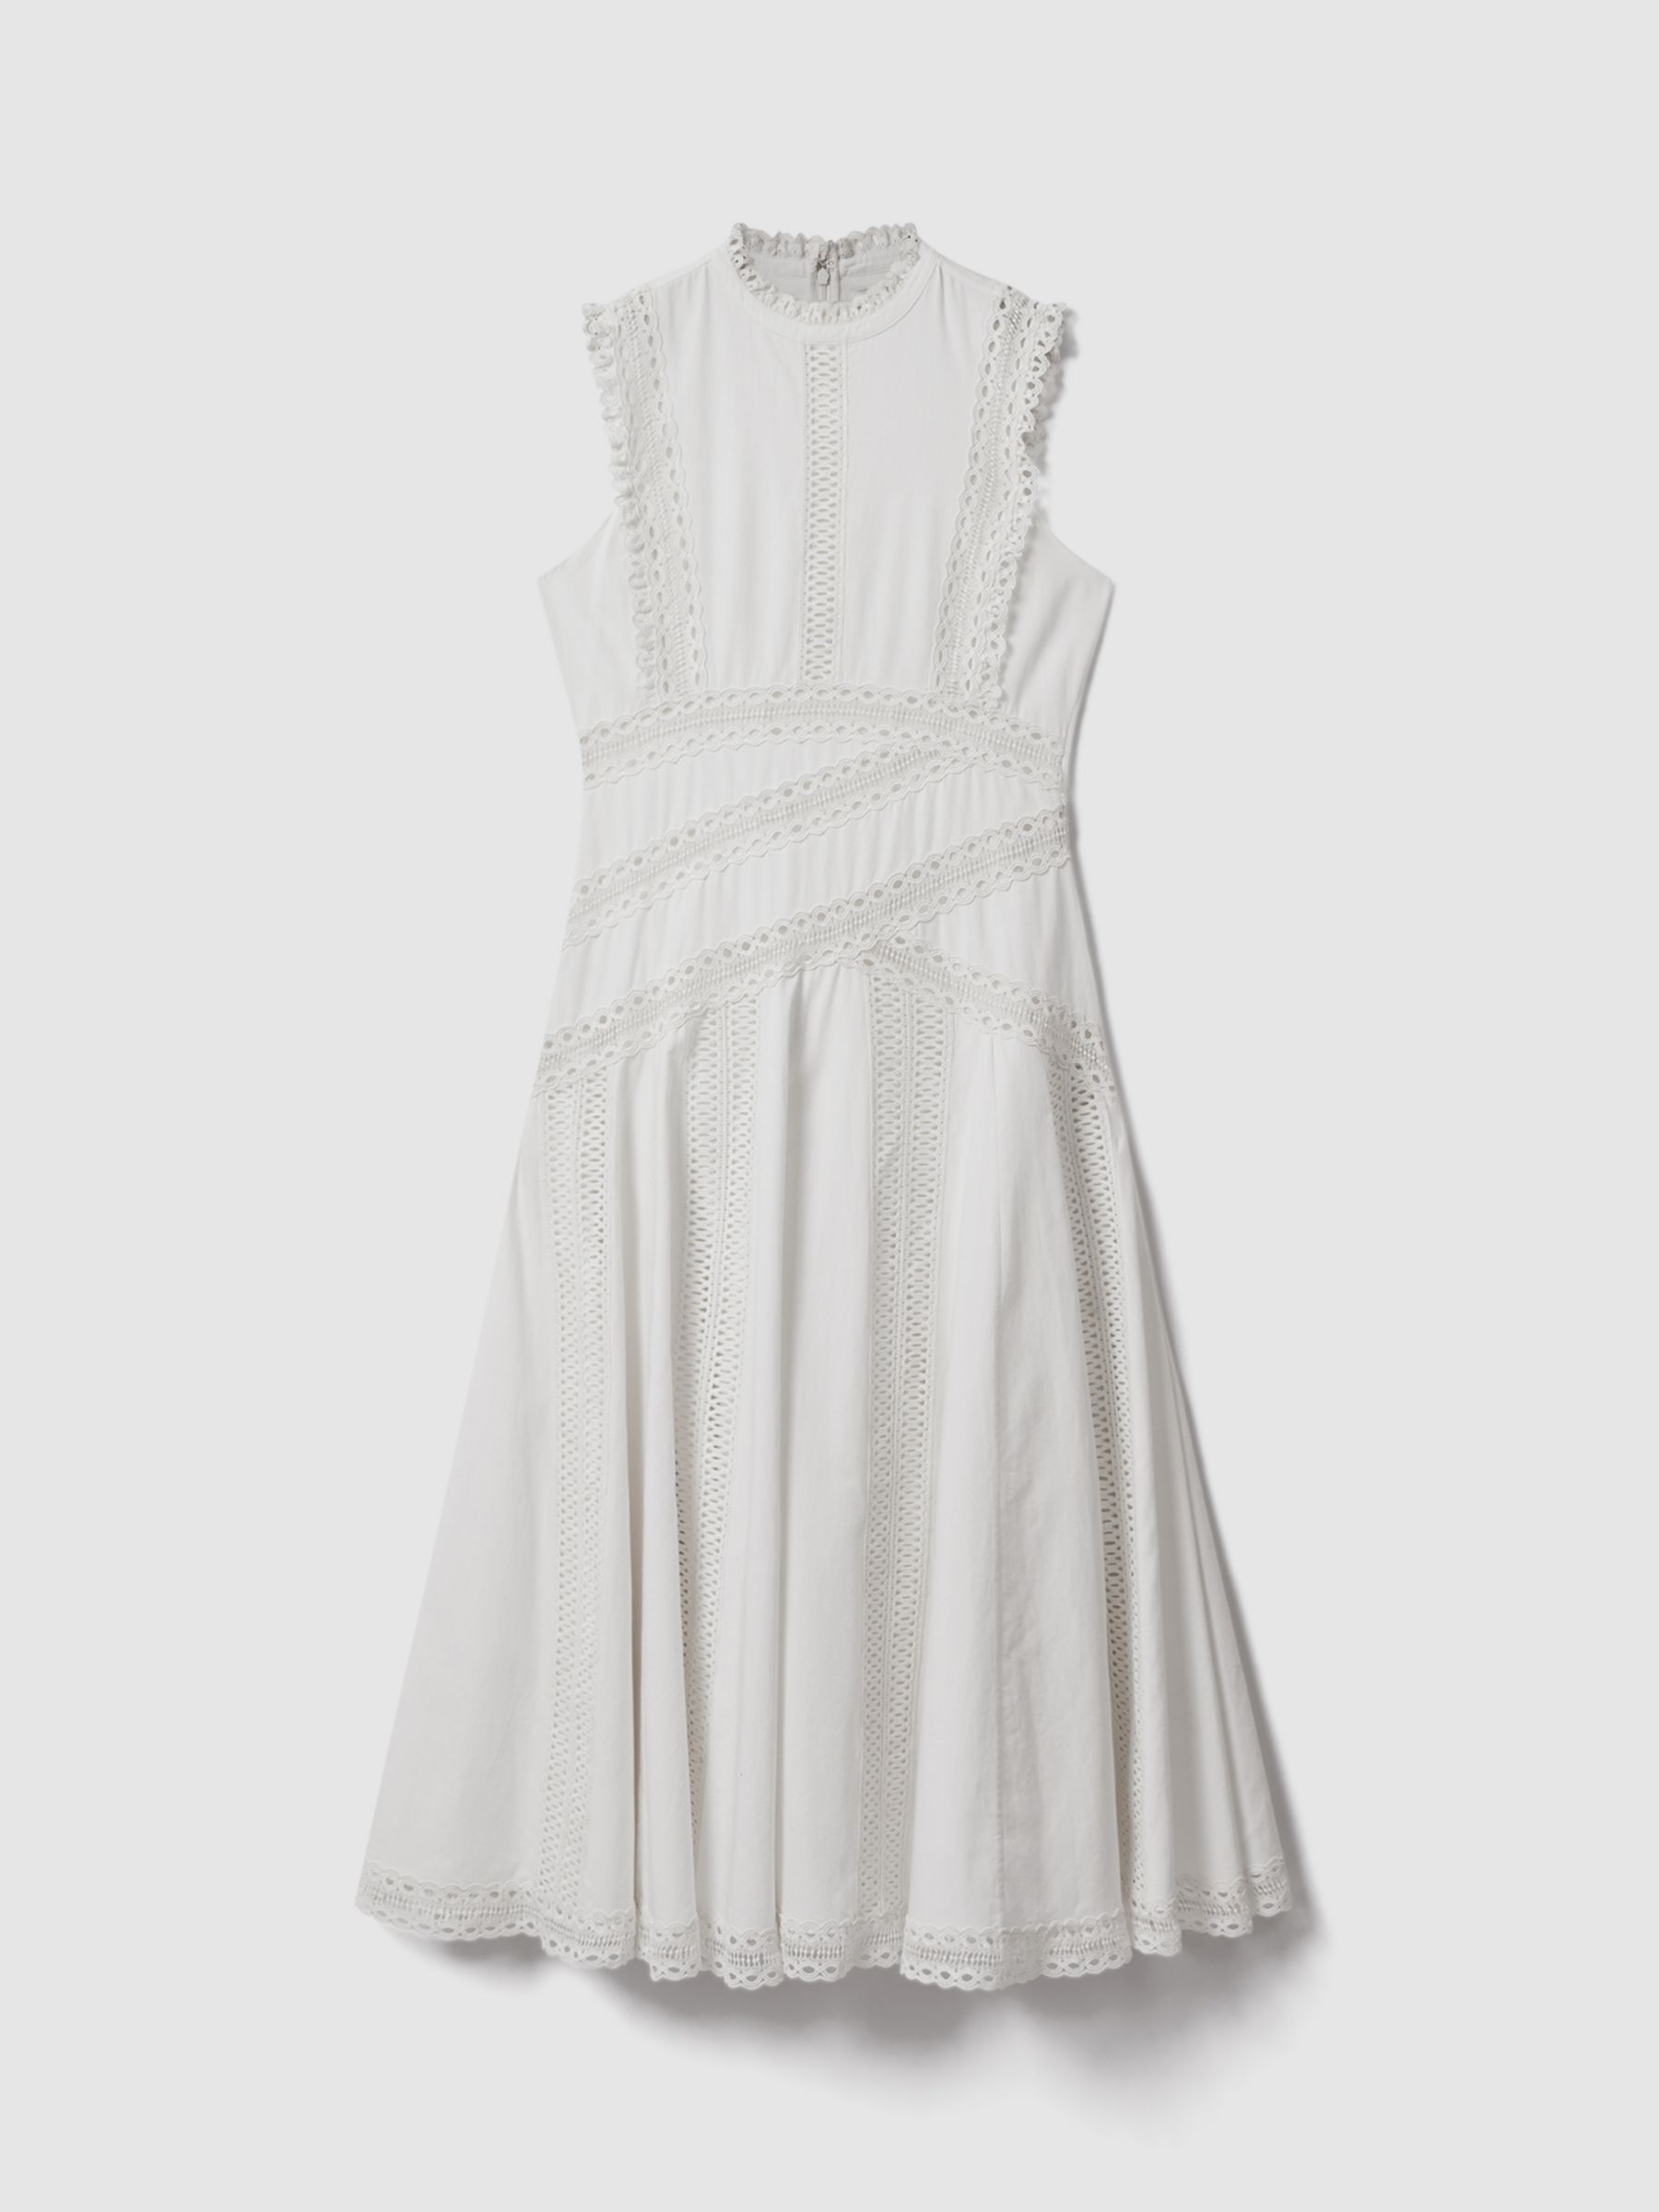 FLORERE Lace Cotton Midi Dress, Ivory, 14